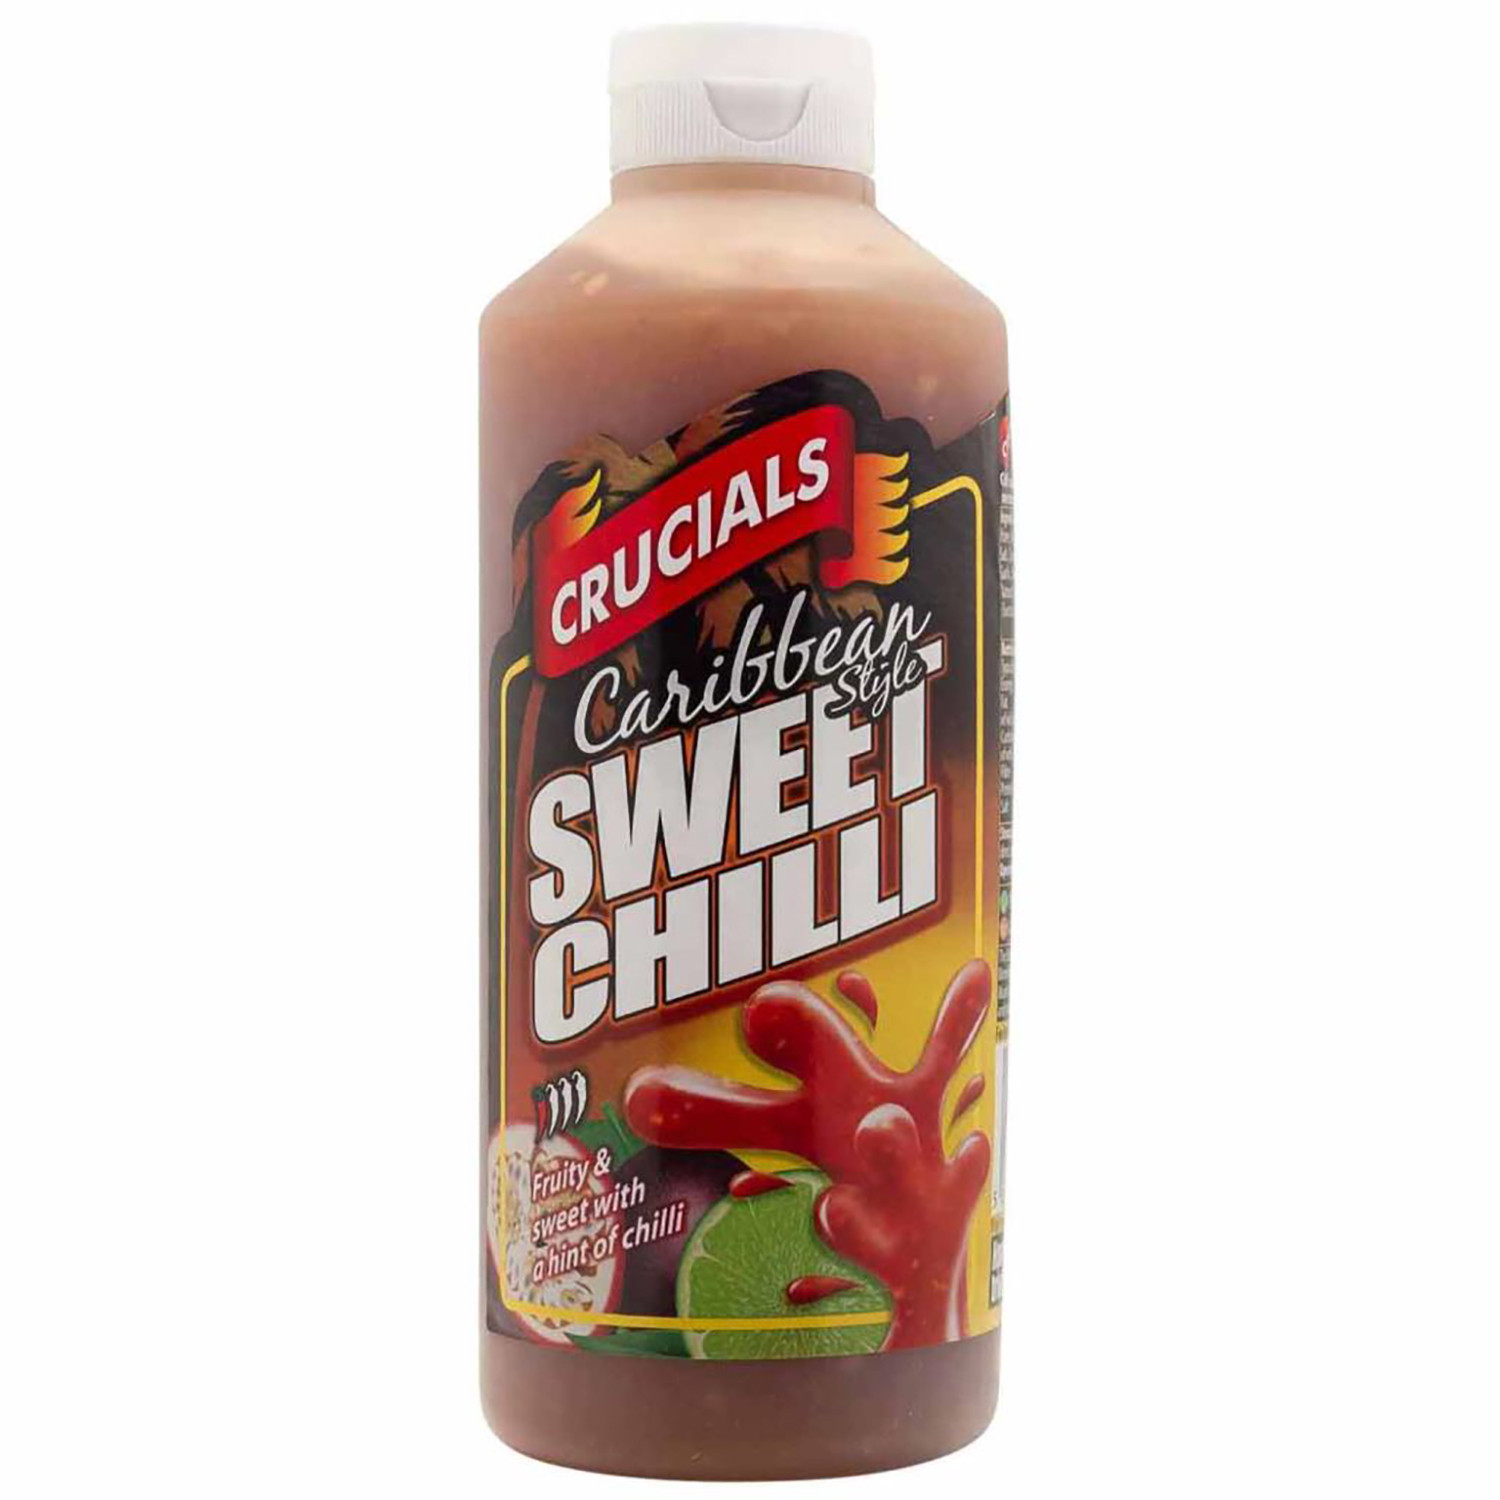 Caribbean Style Sweet Chilli Sauce Image